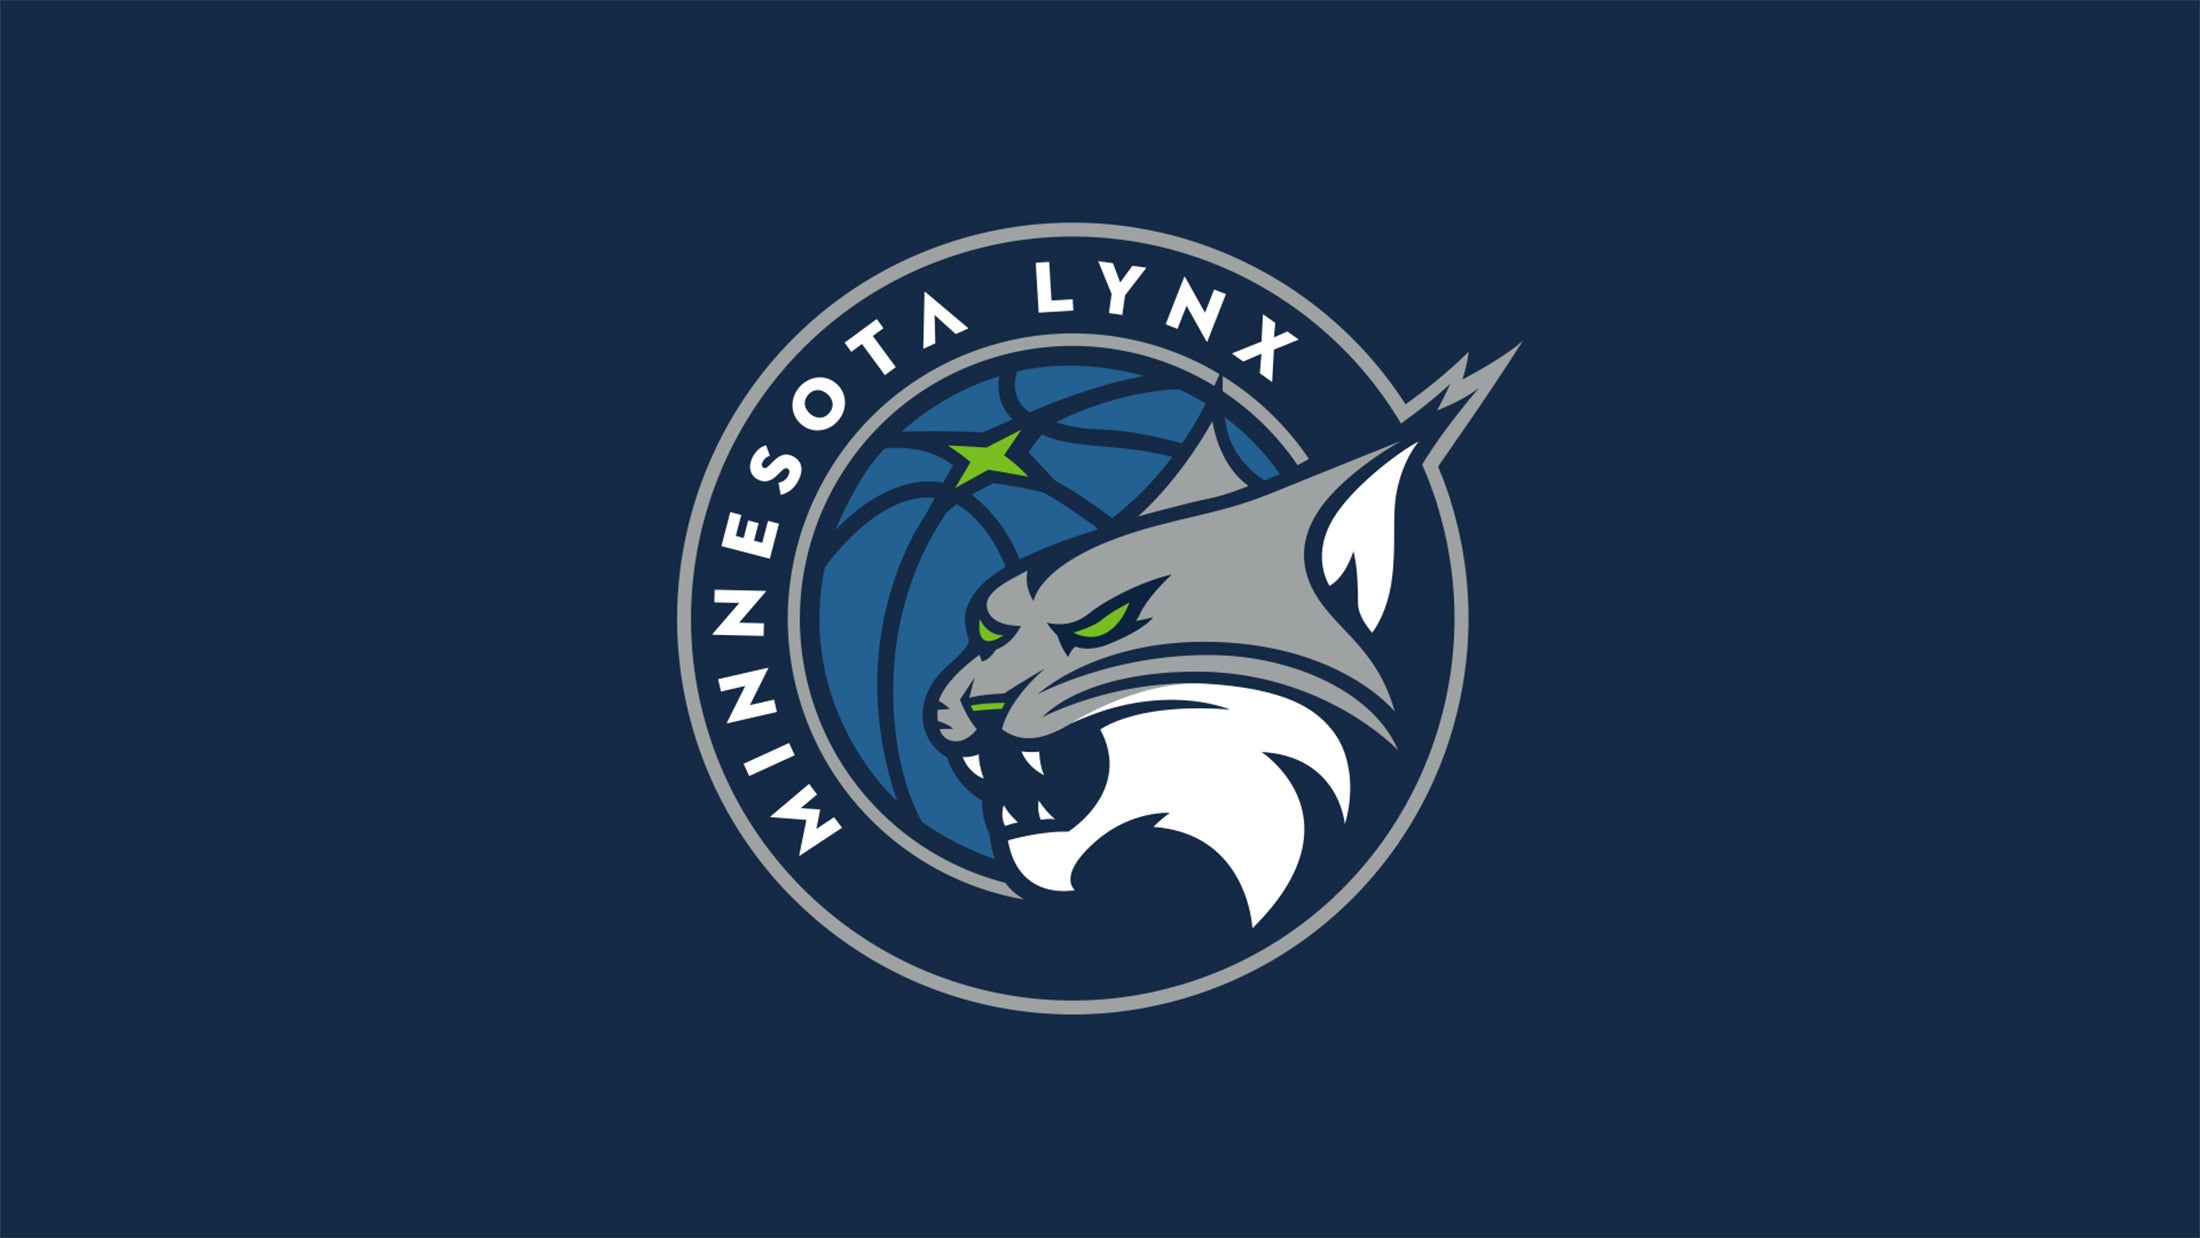 Minnesota Lynx vs. Seattle Storm at Target Center